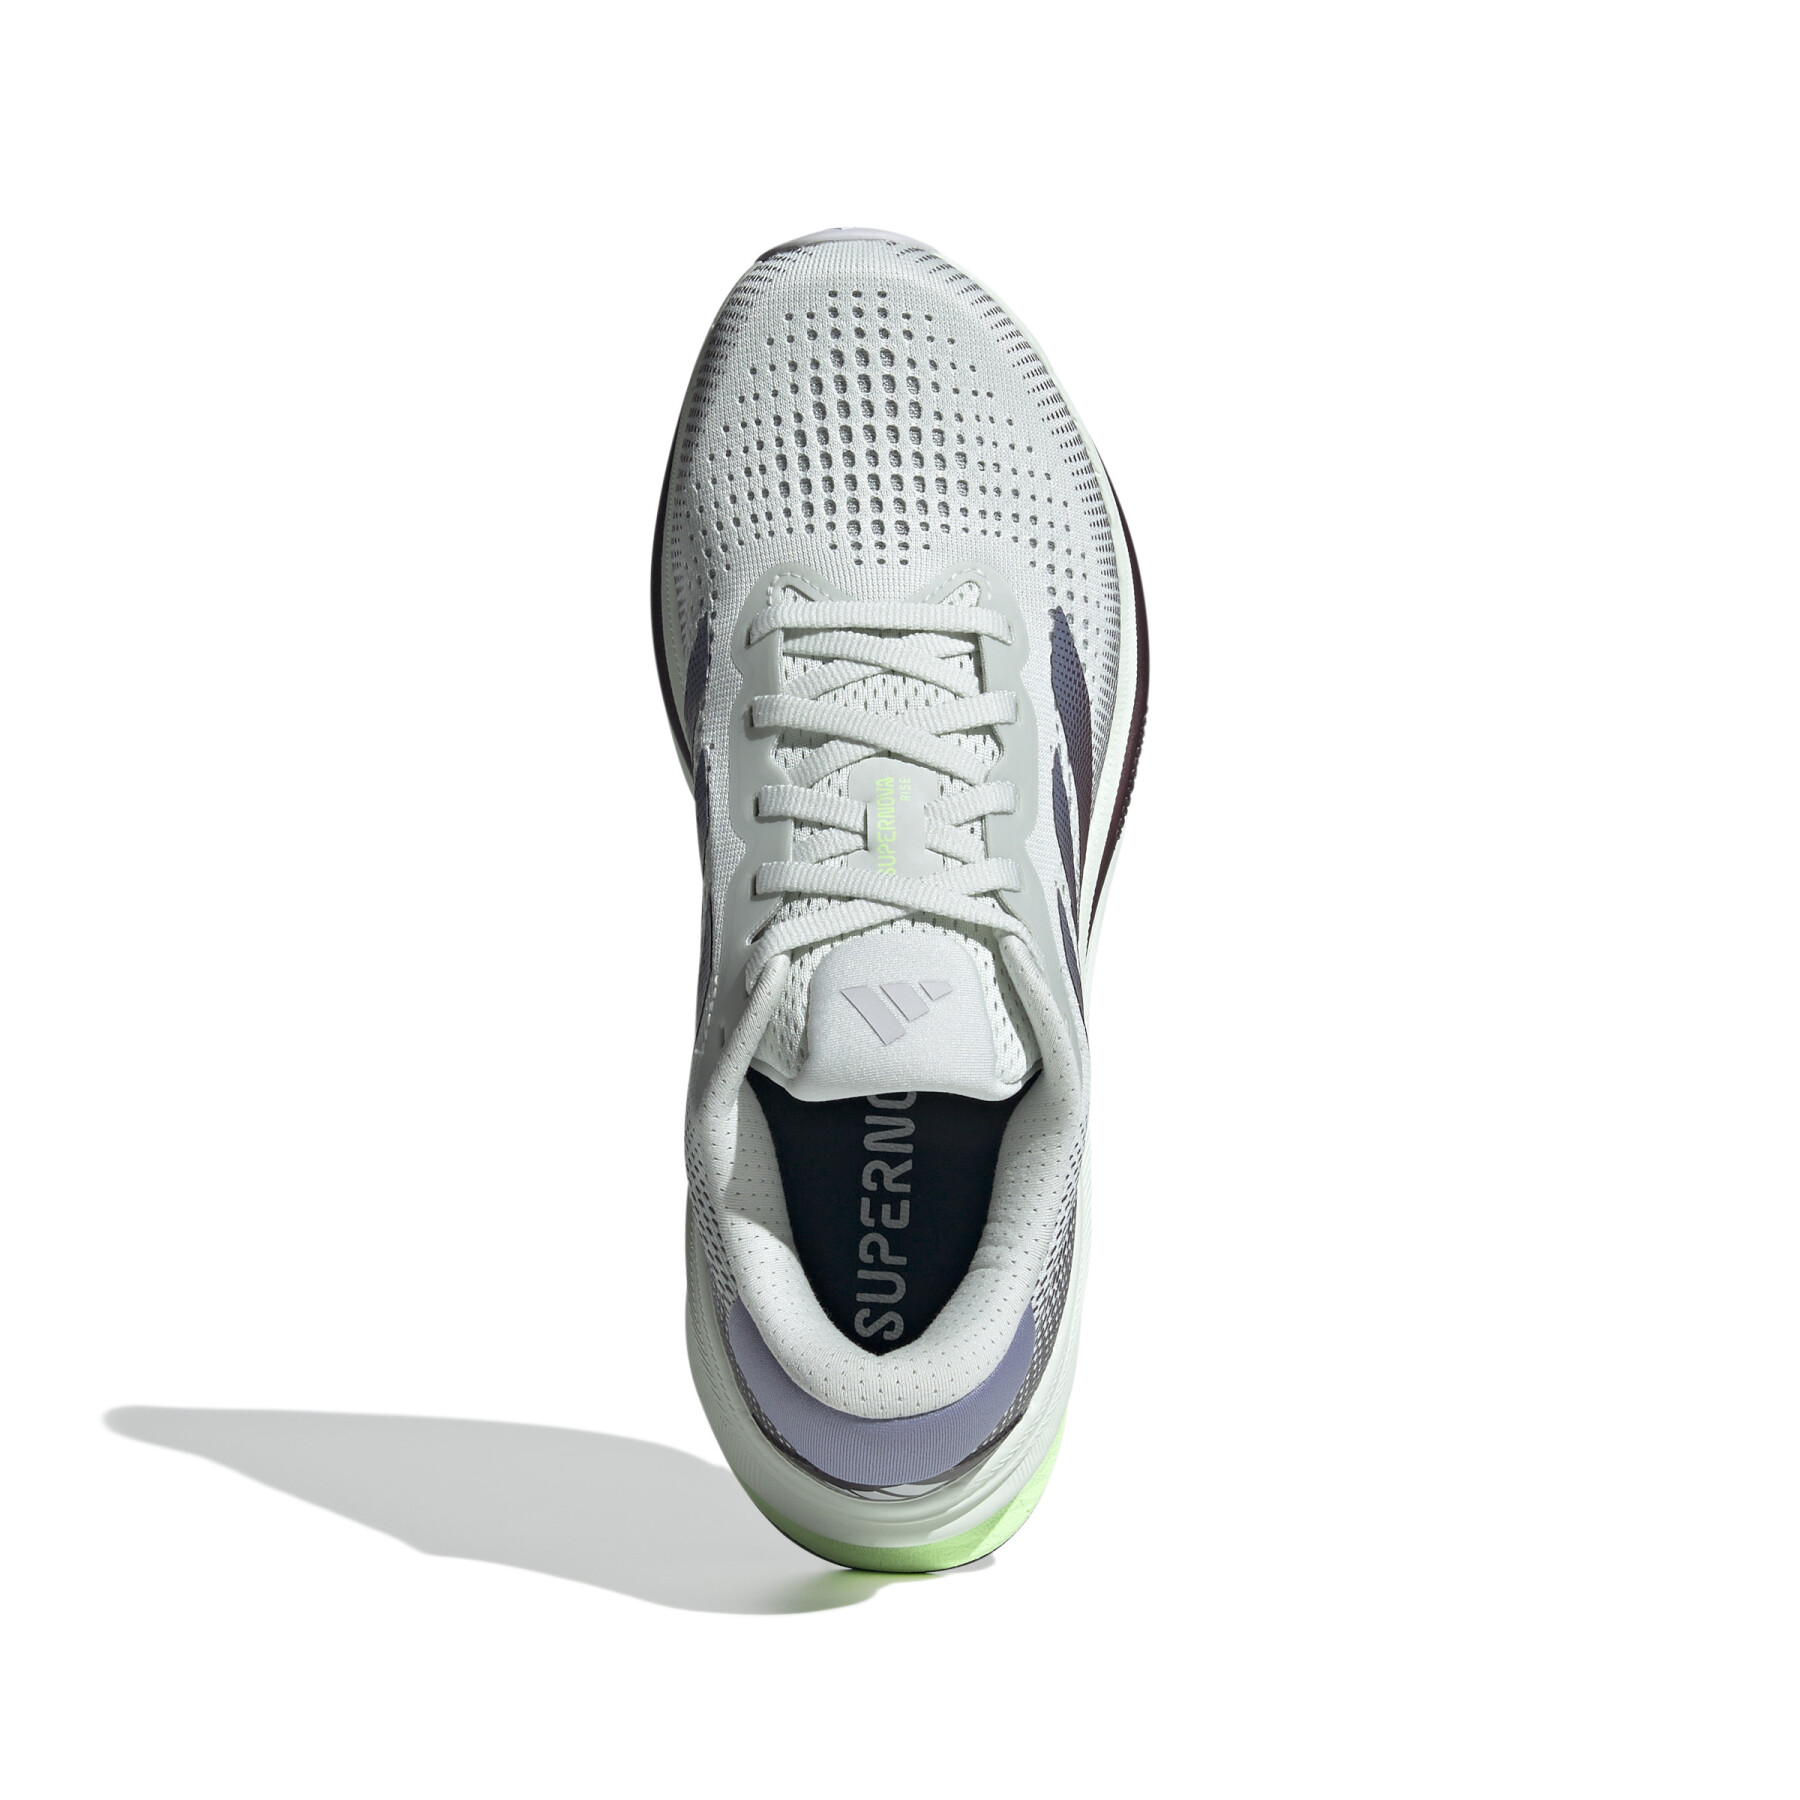 Women's running shoes adidas Supernova Rise